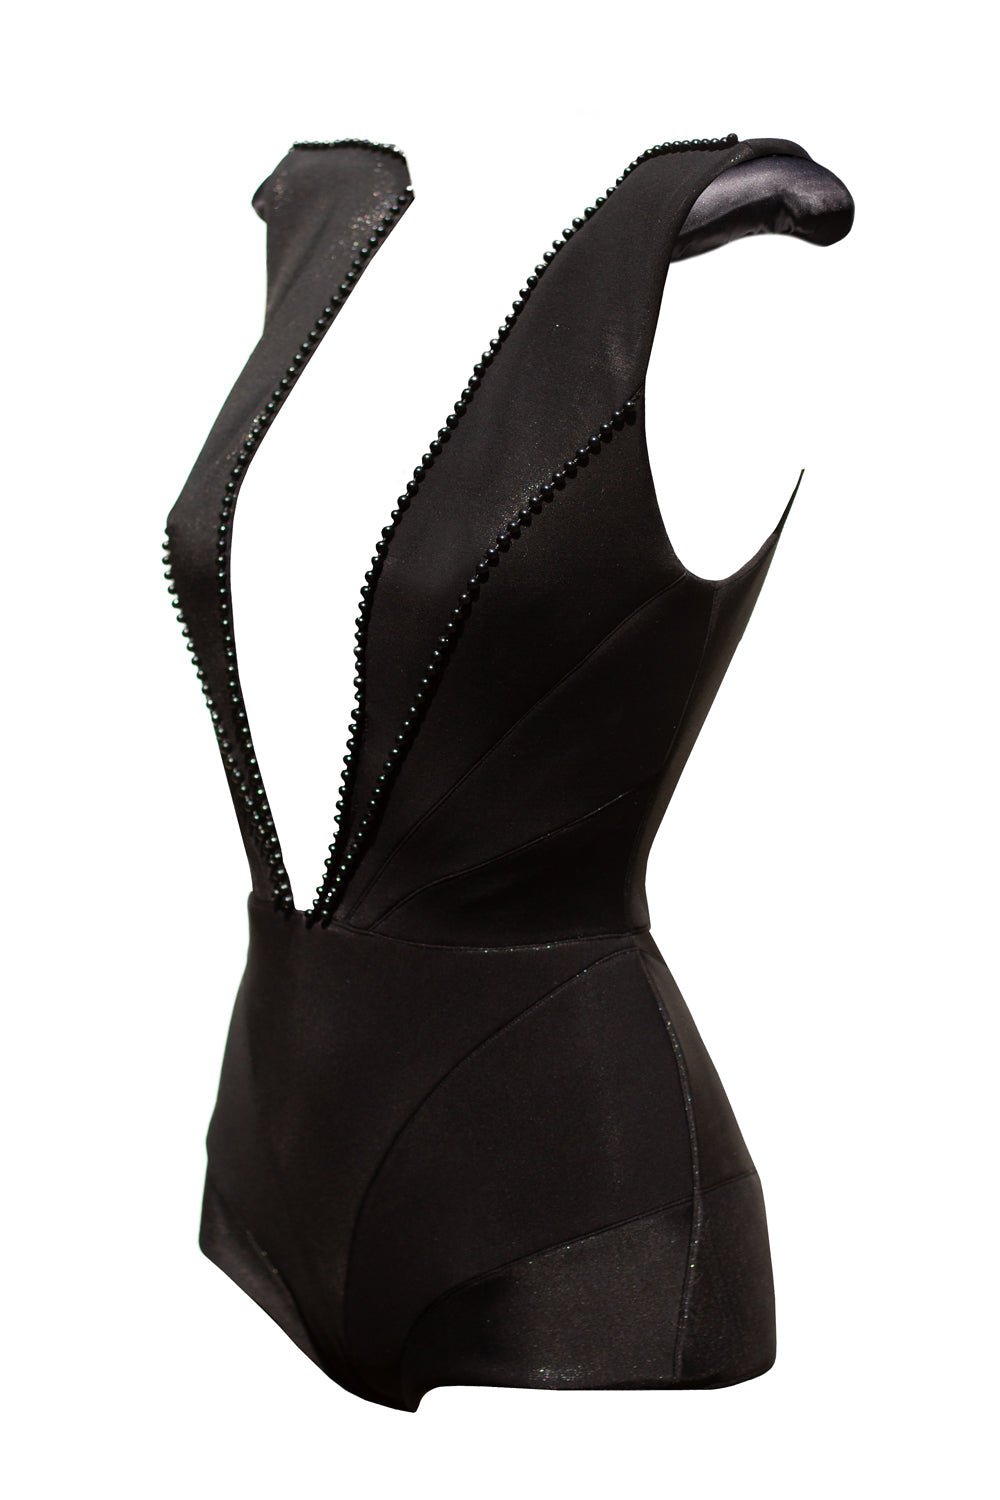 Black Swan bodysuit - bodysuit by Keosme. Shop on yesUndress